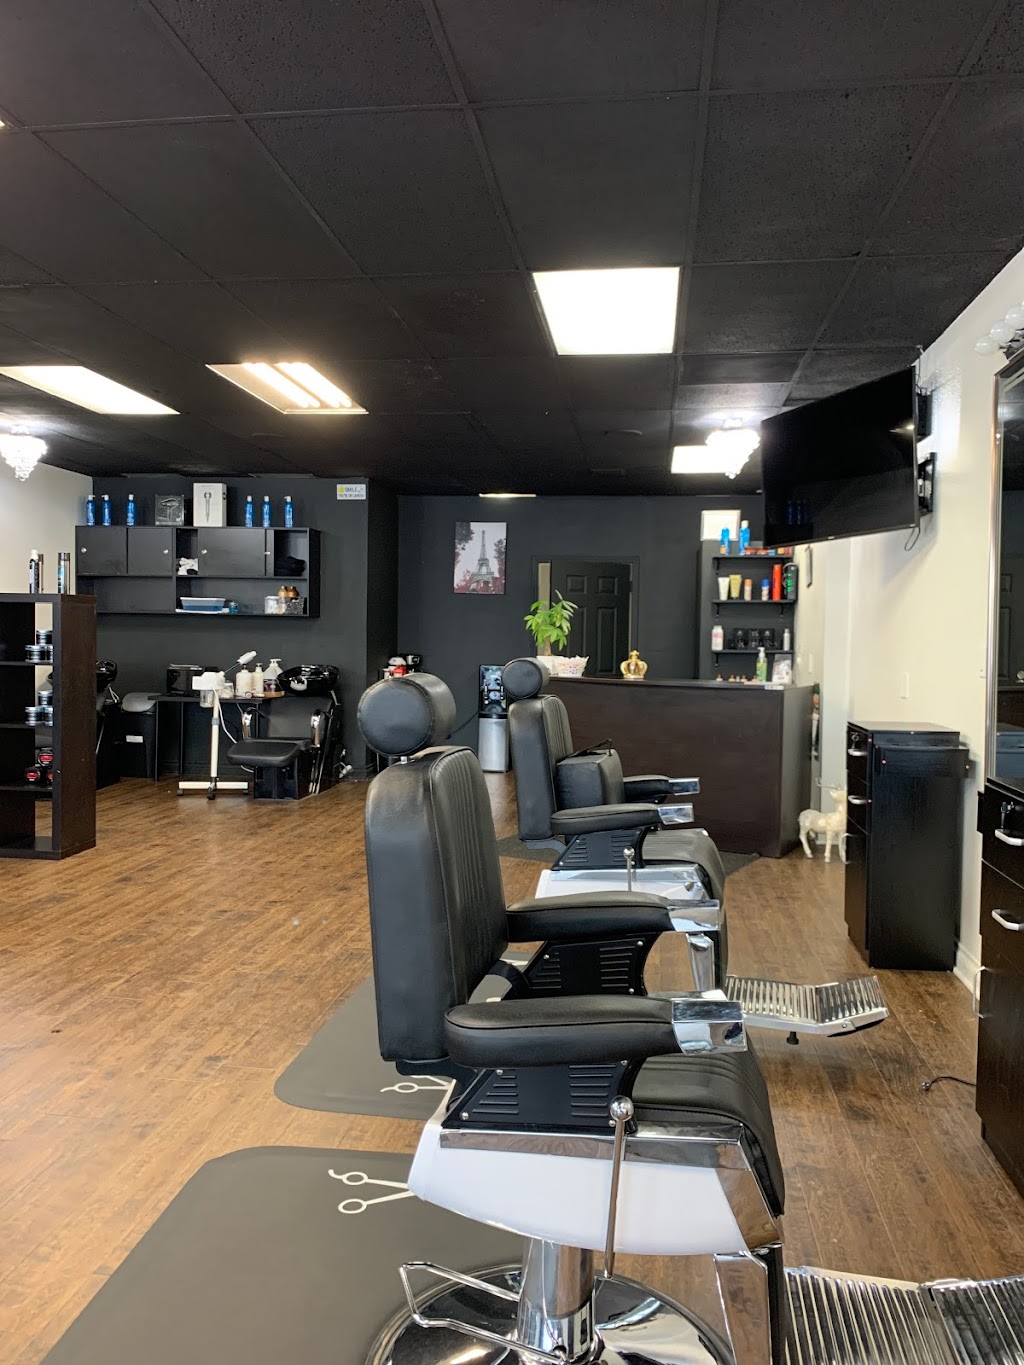 kings barber shop | 221 S Magnolia Ave suite b/2, Anaheim, CA 92804, USA | Phone: (714) 499-1906